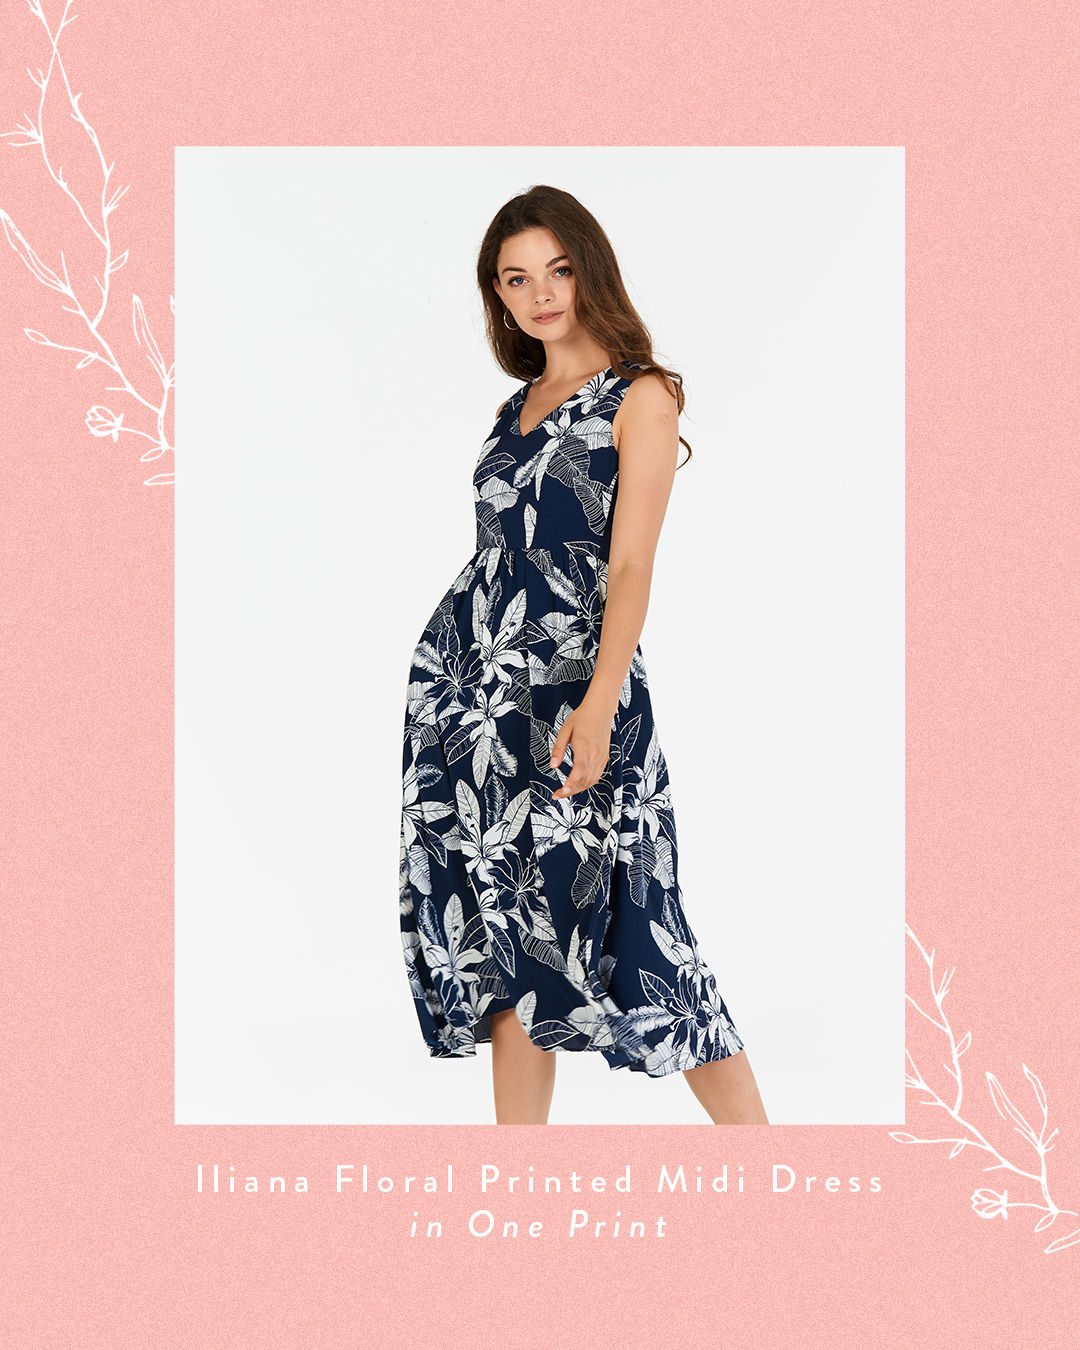 Iliana Floral Printed Midi Dress